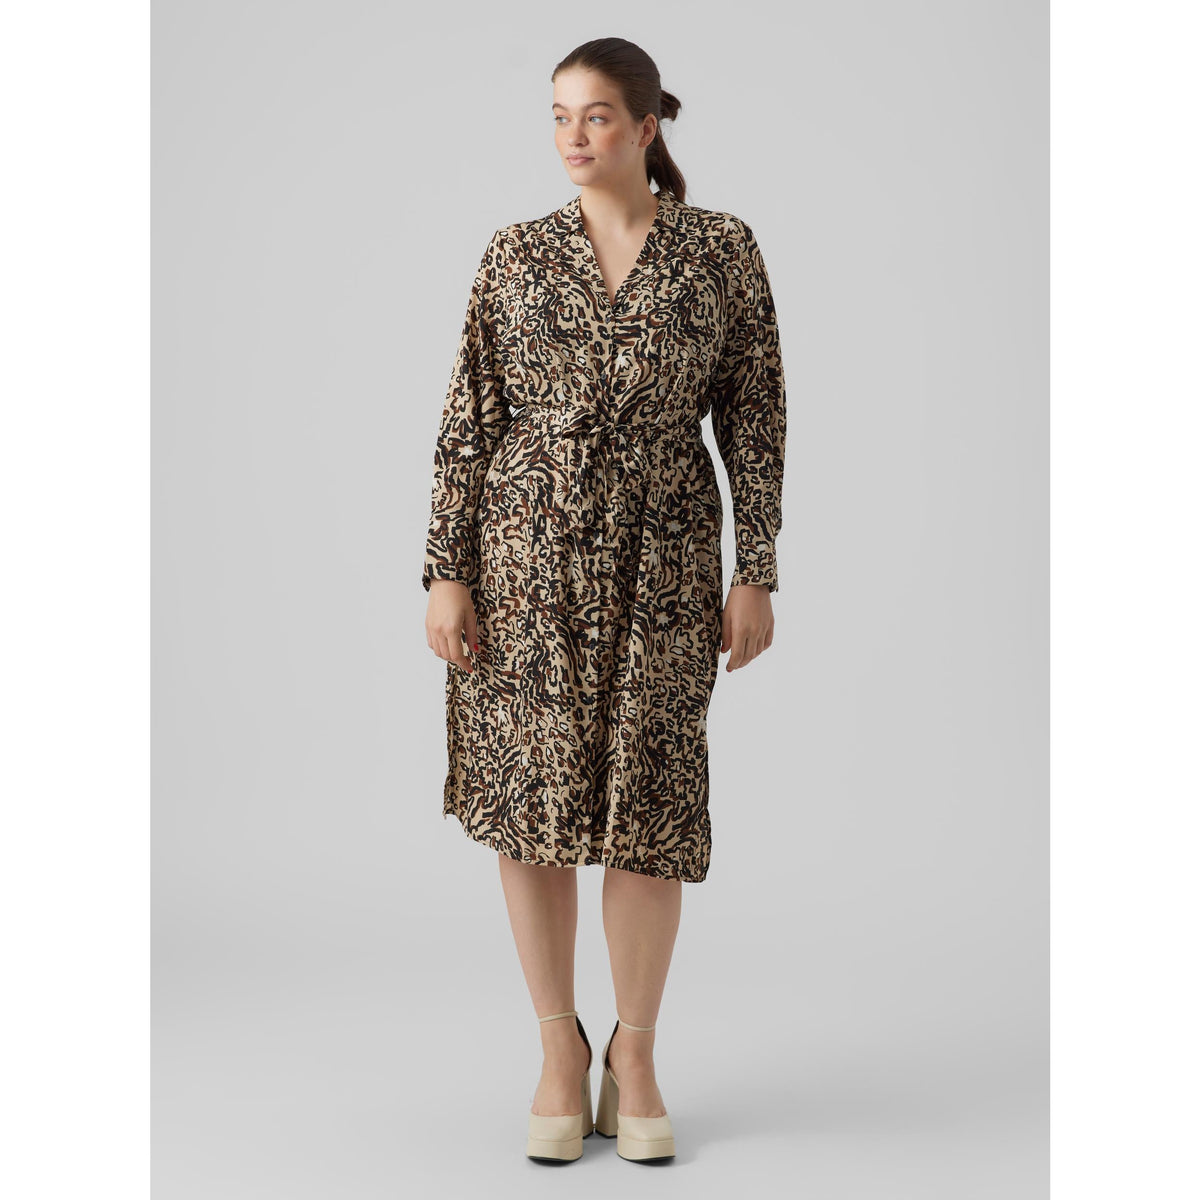 Vero Moda Curve Lydia Animal Print Dress - Wardrobe Plus